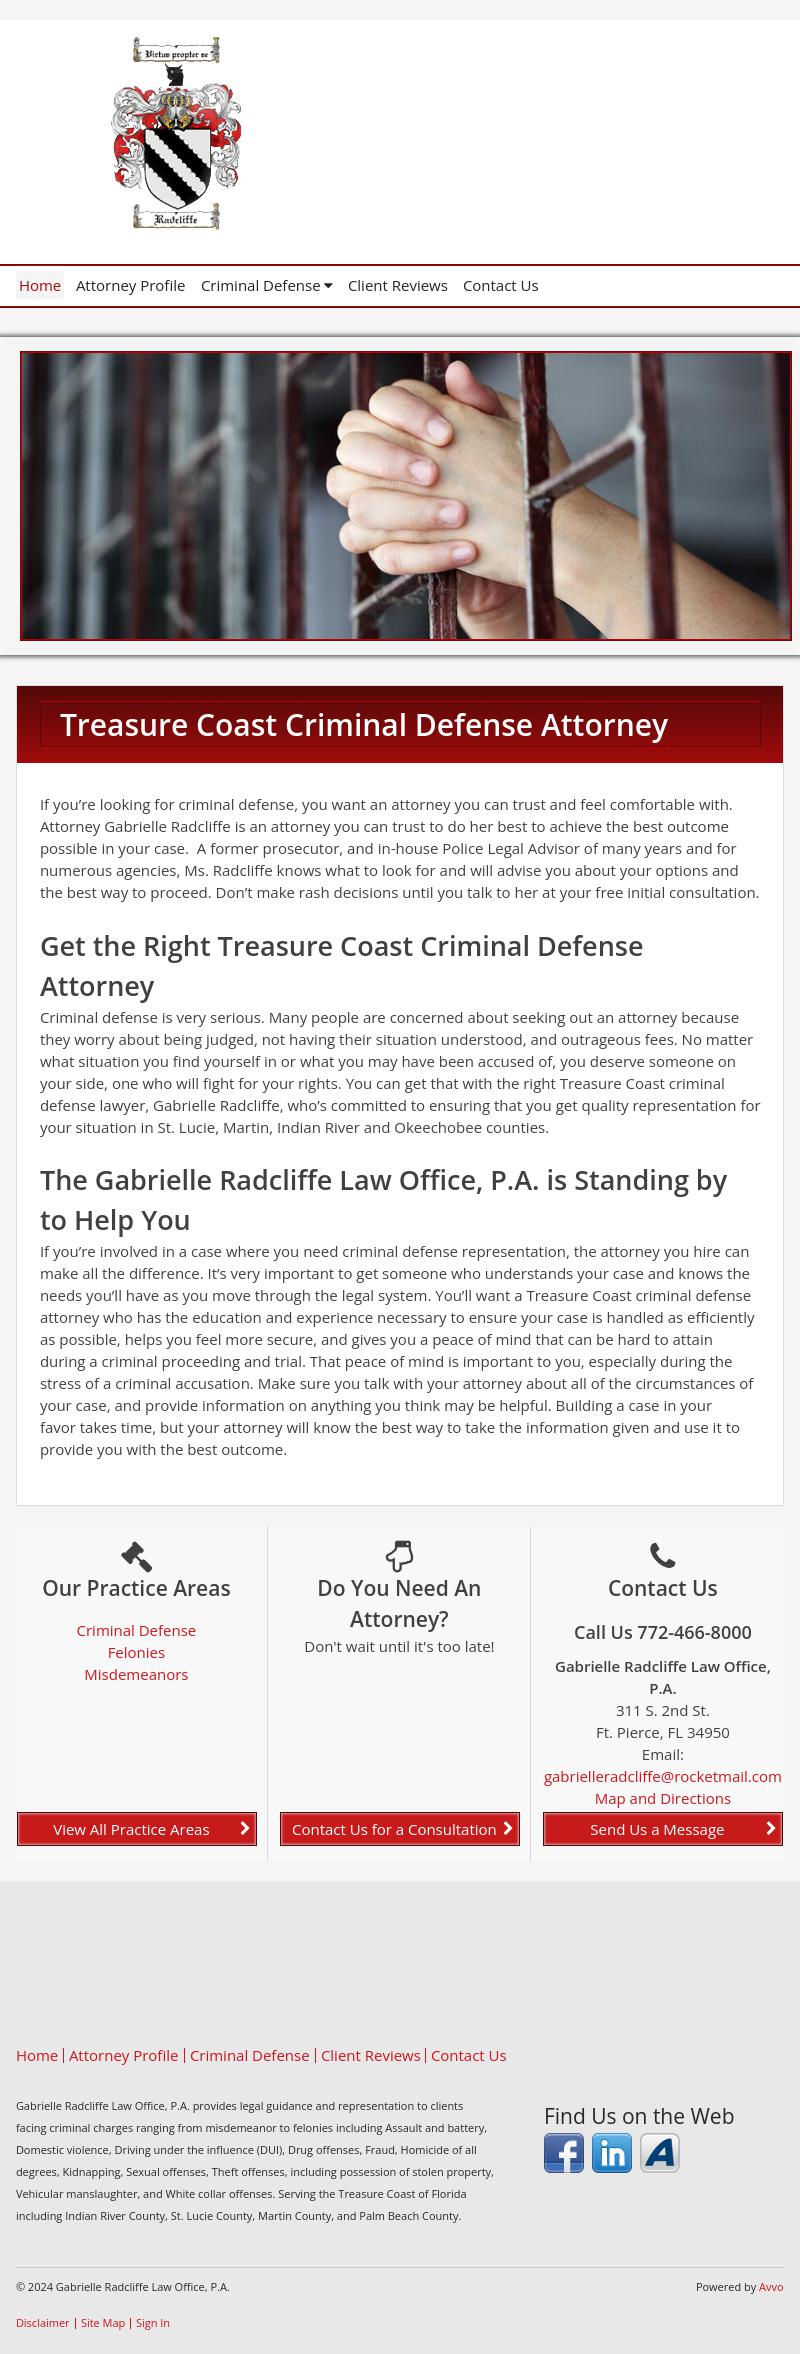 Gabrielle Radcliffe Law Office PA - Fort Pierce FL Lawyers